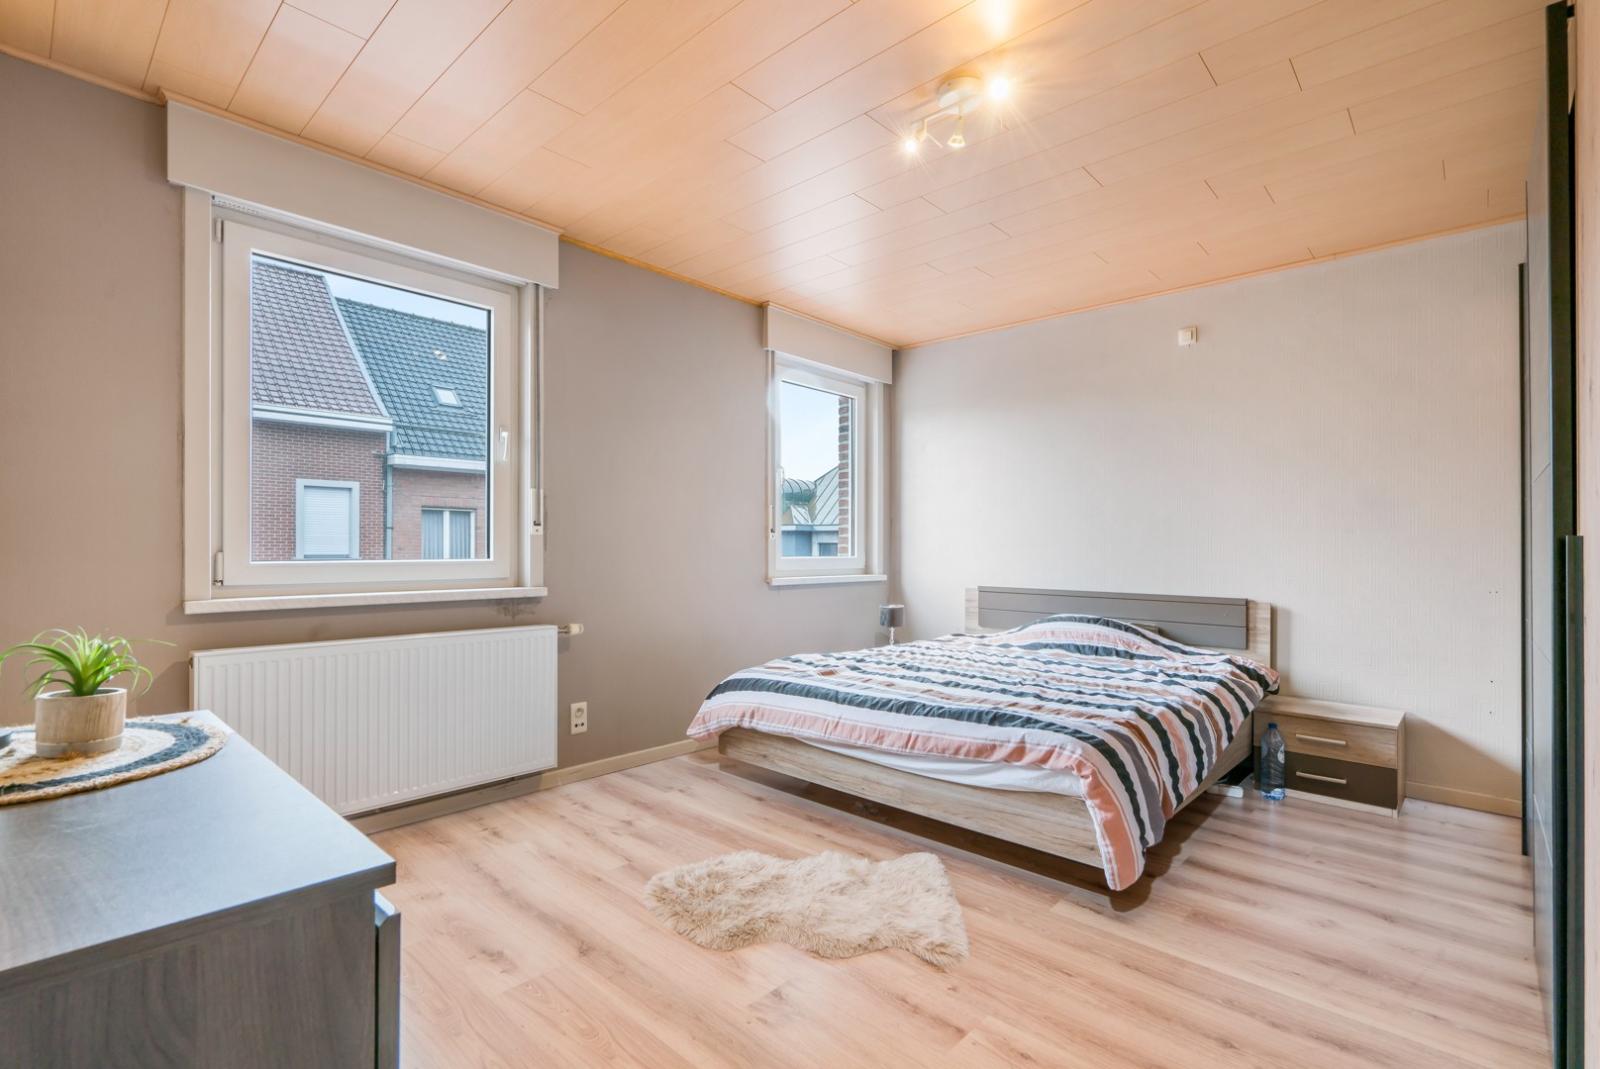 Instapklare gezinswoning met 4 slaapkamers, tuin & garage te Lendelede!